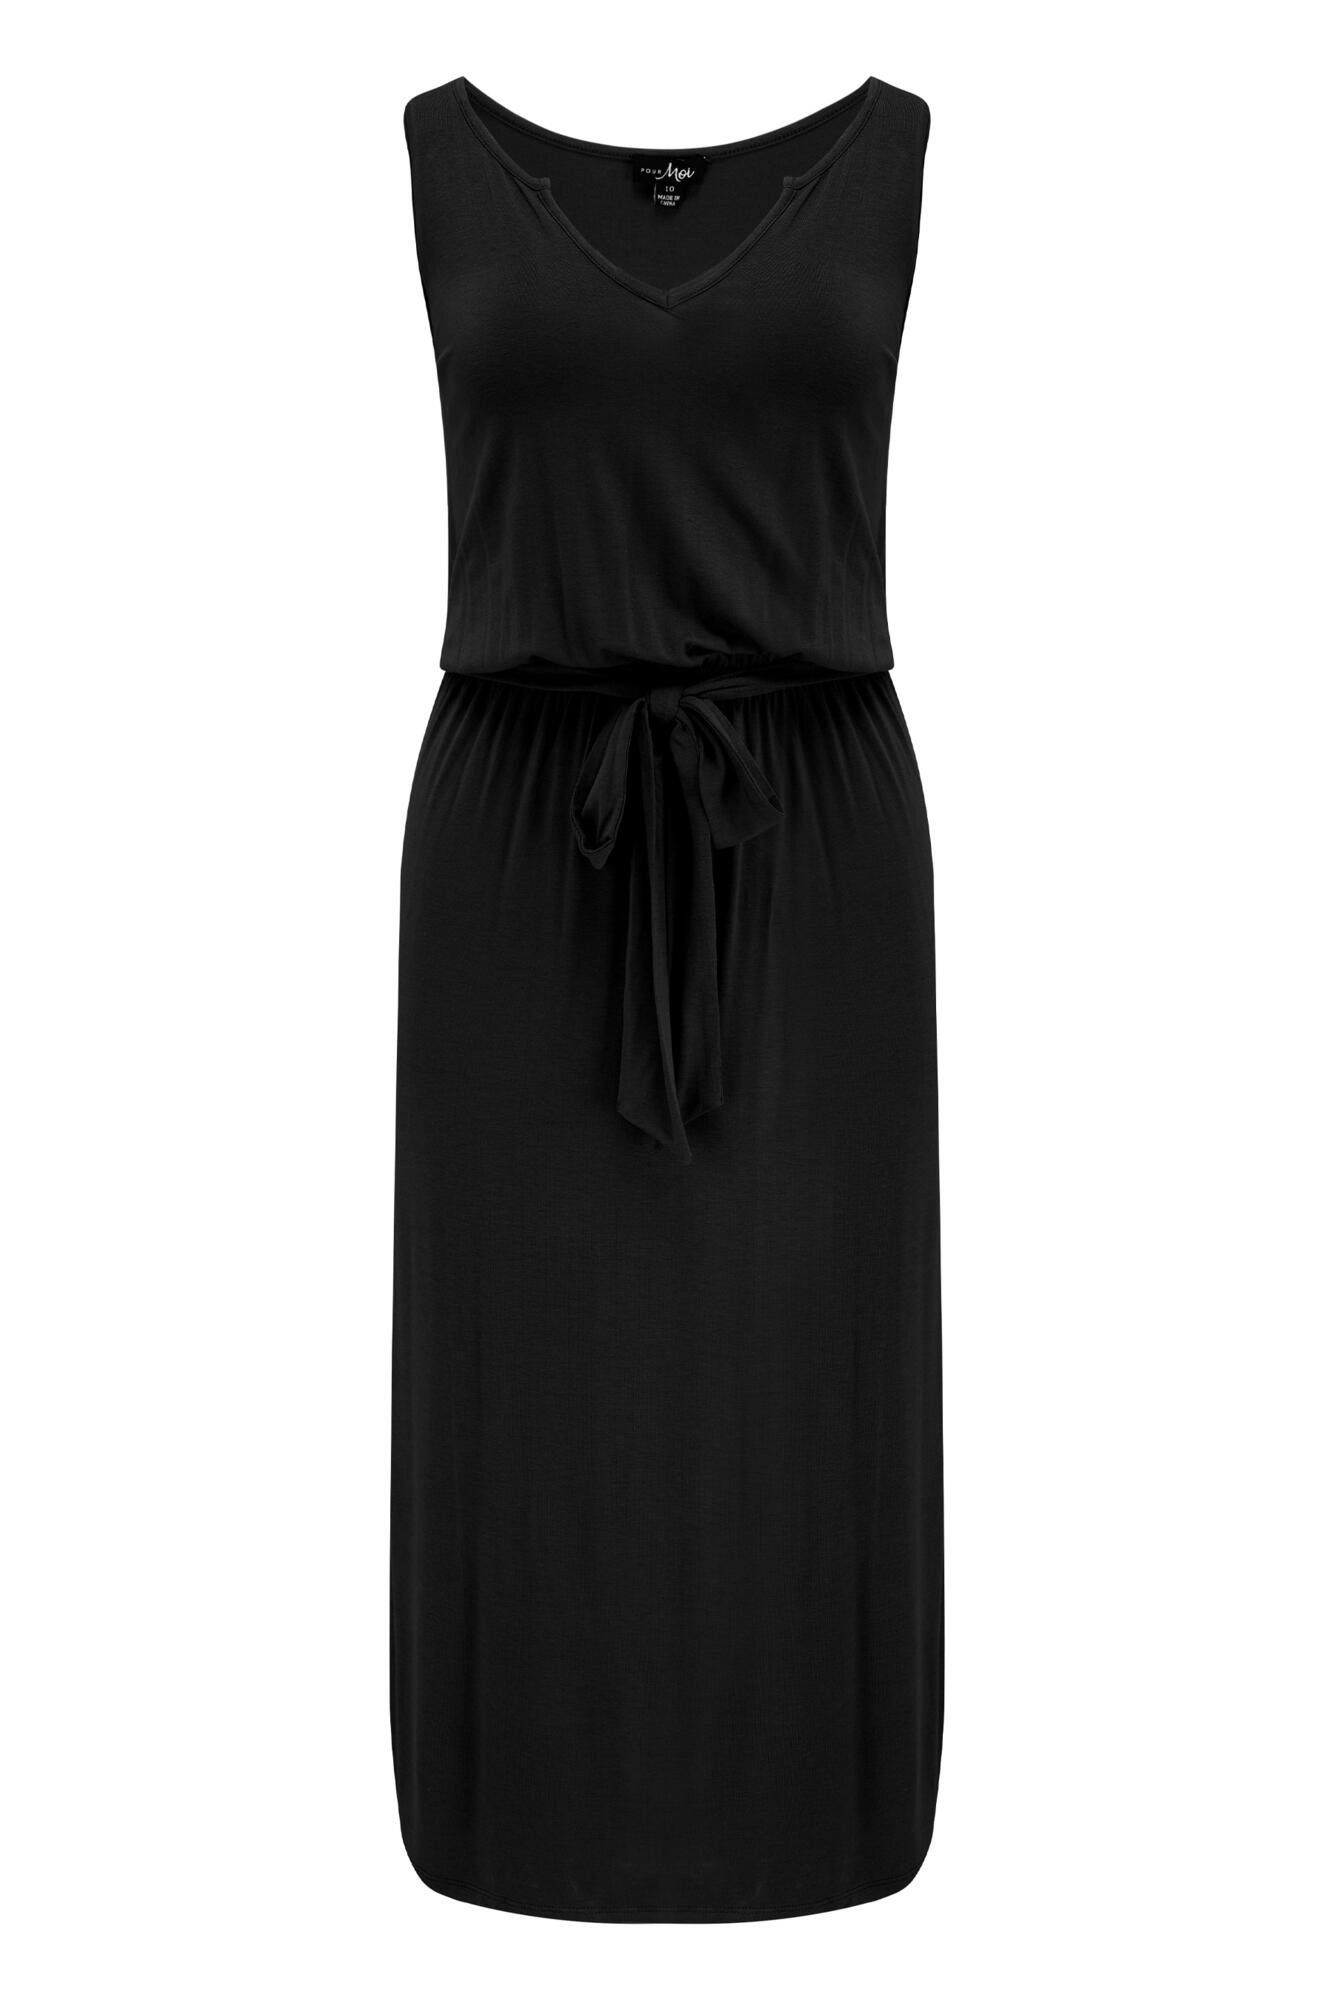 Jessie Fuller Bust Notch Neck Stretch Midi Dress | Black | Pour Moi